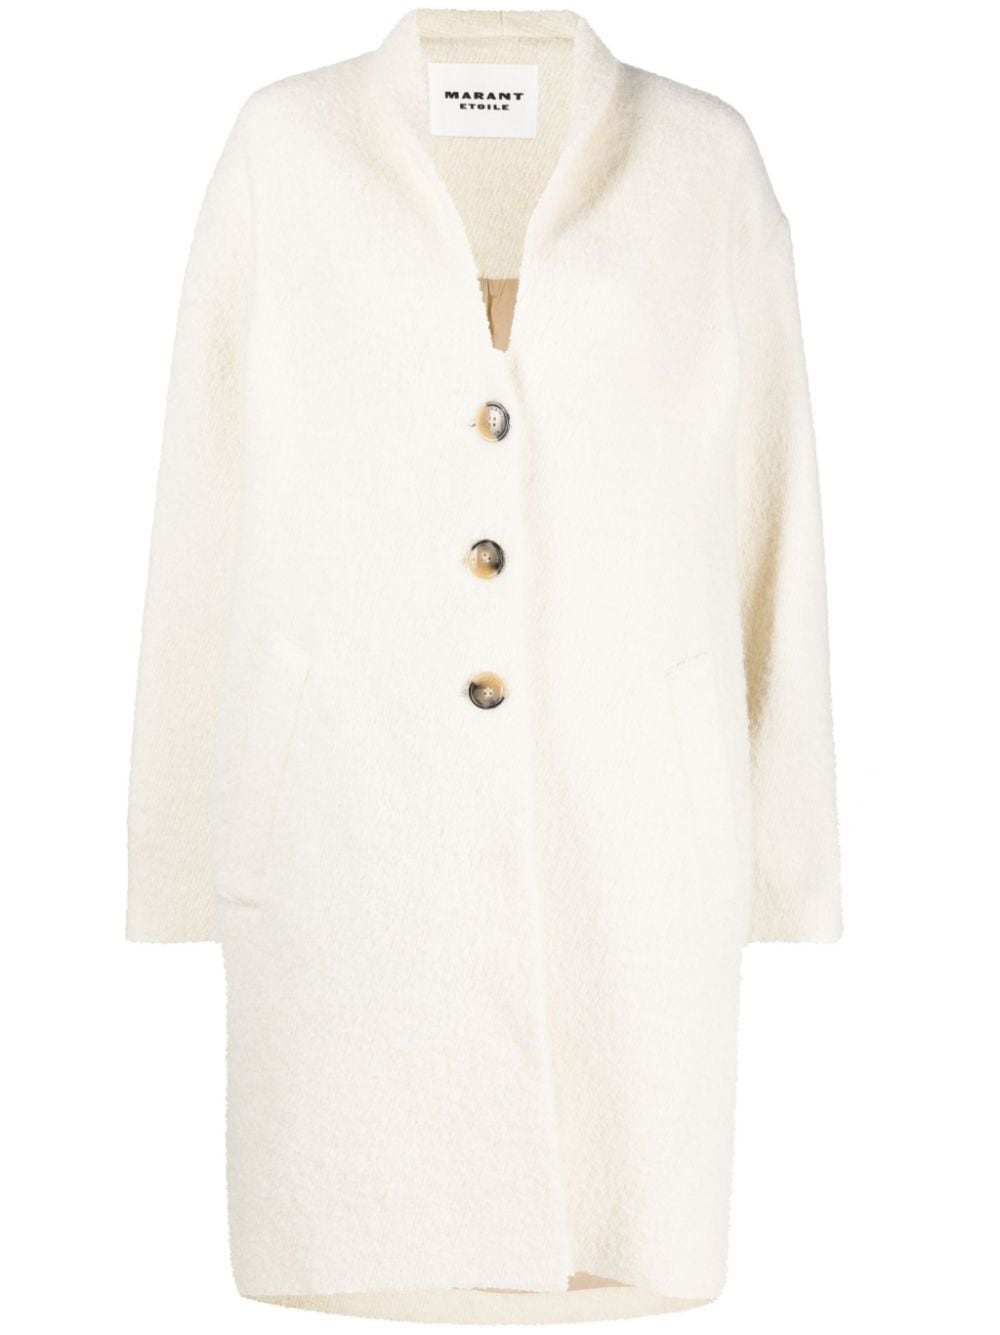 MARANT ÉTOILE fine-knit single breasted coat - White von MARANT ÉTOILE